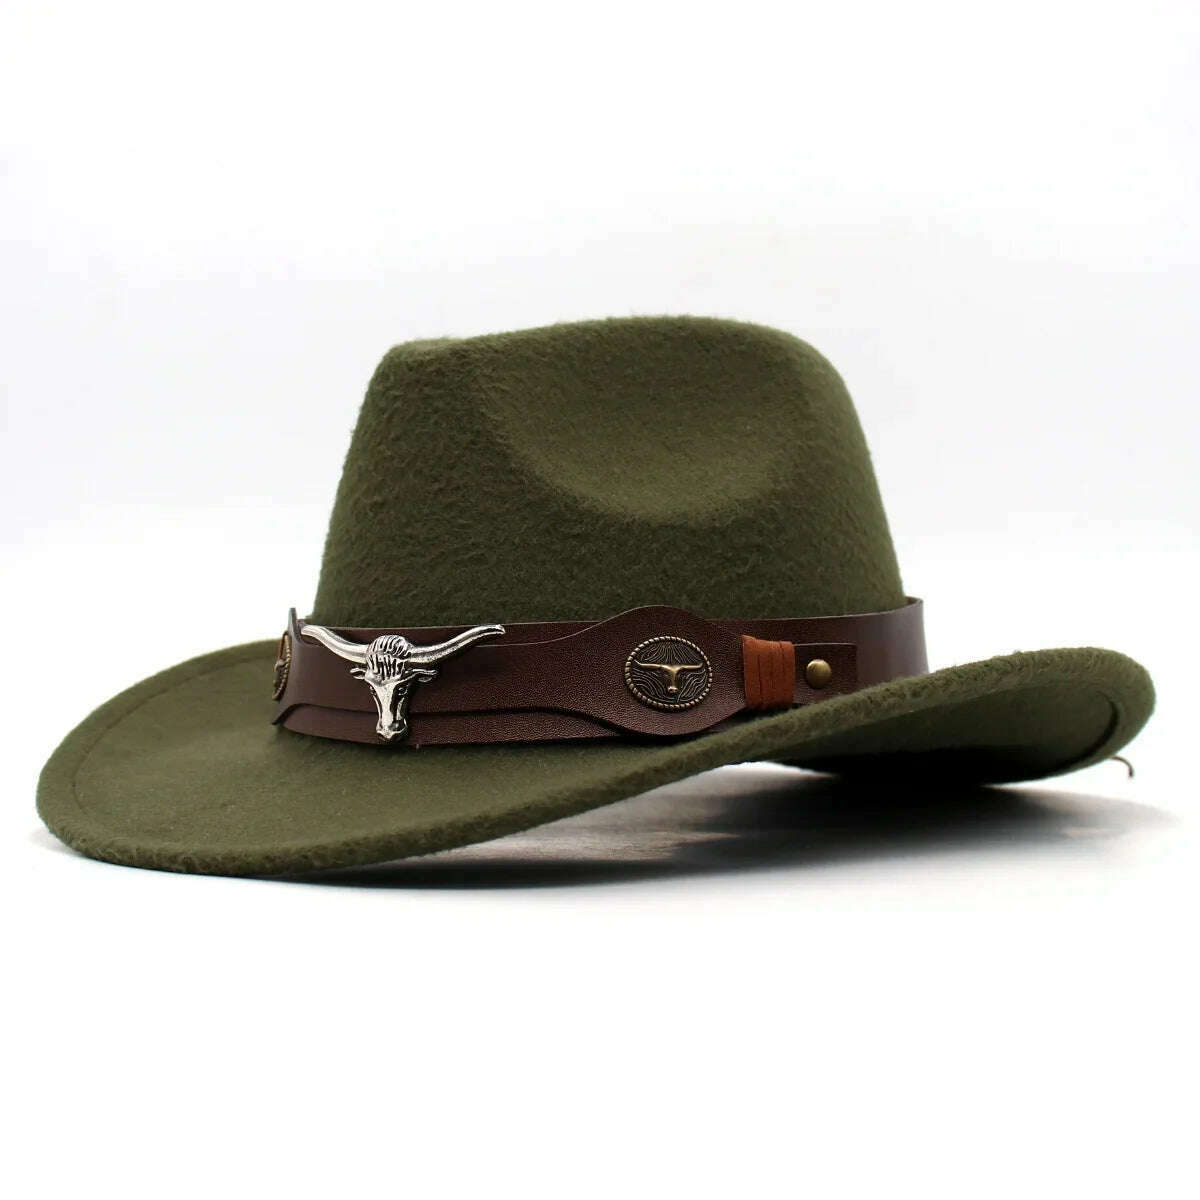 KIMLUD, Western Cowboy Black Hat With Bull Decor Classic Wide Brim Jazz Imitation Wool Hats For Women Felt Hats With Cow Head Knight Hat, Green ZongNT / S(52-54cm Child), KIMLUD Women's Clothes